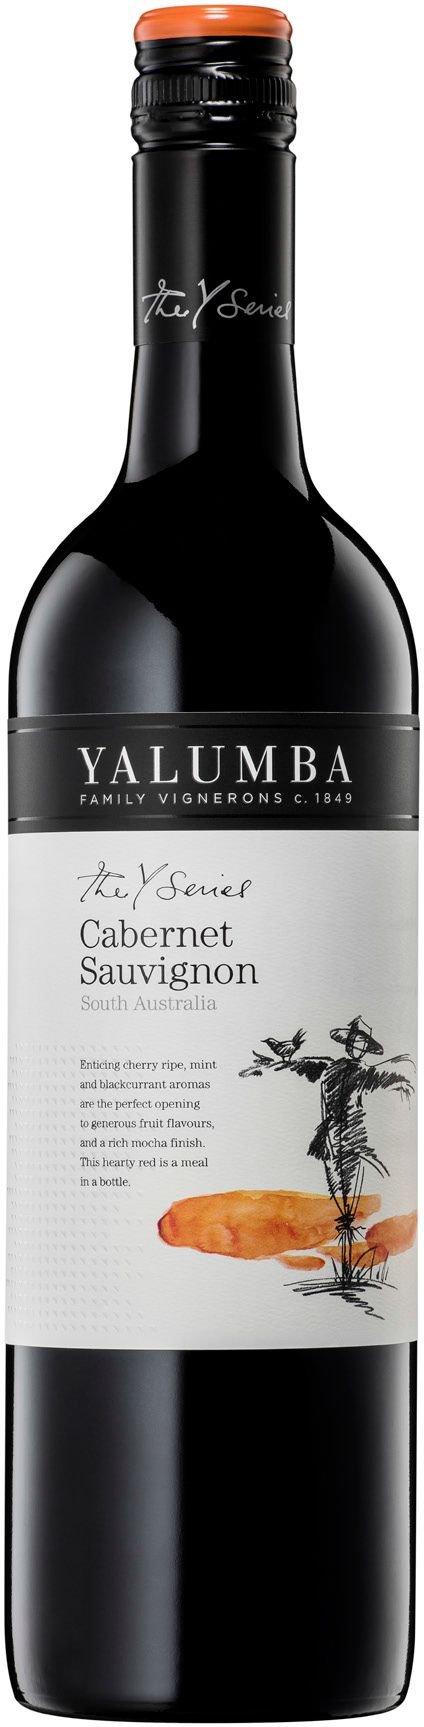 Yalumba 2014, The Y Series Cabernet Sauvignon  